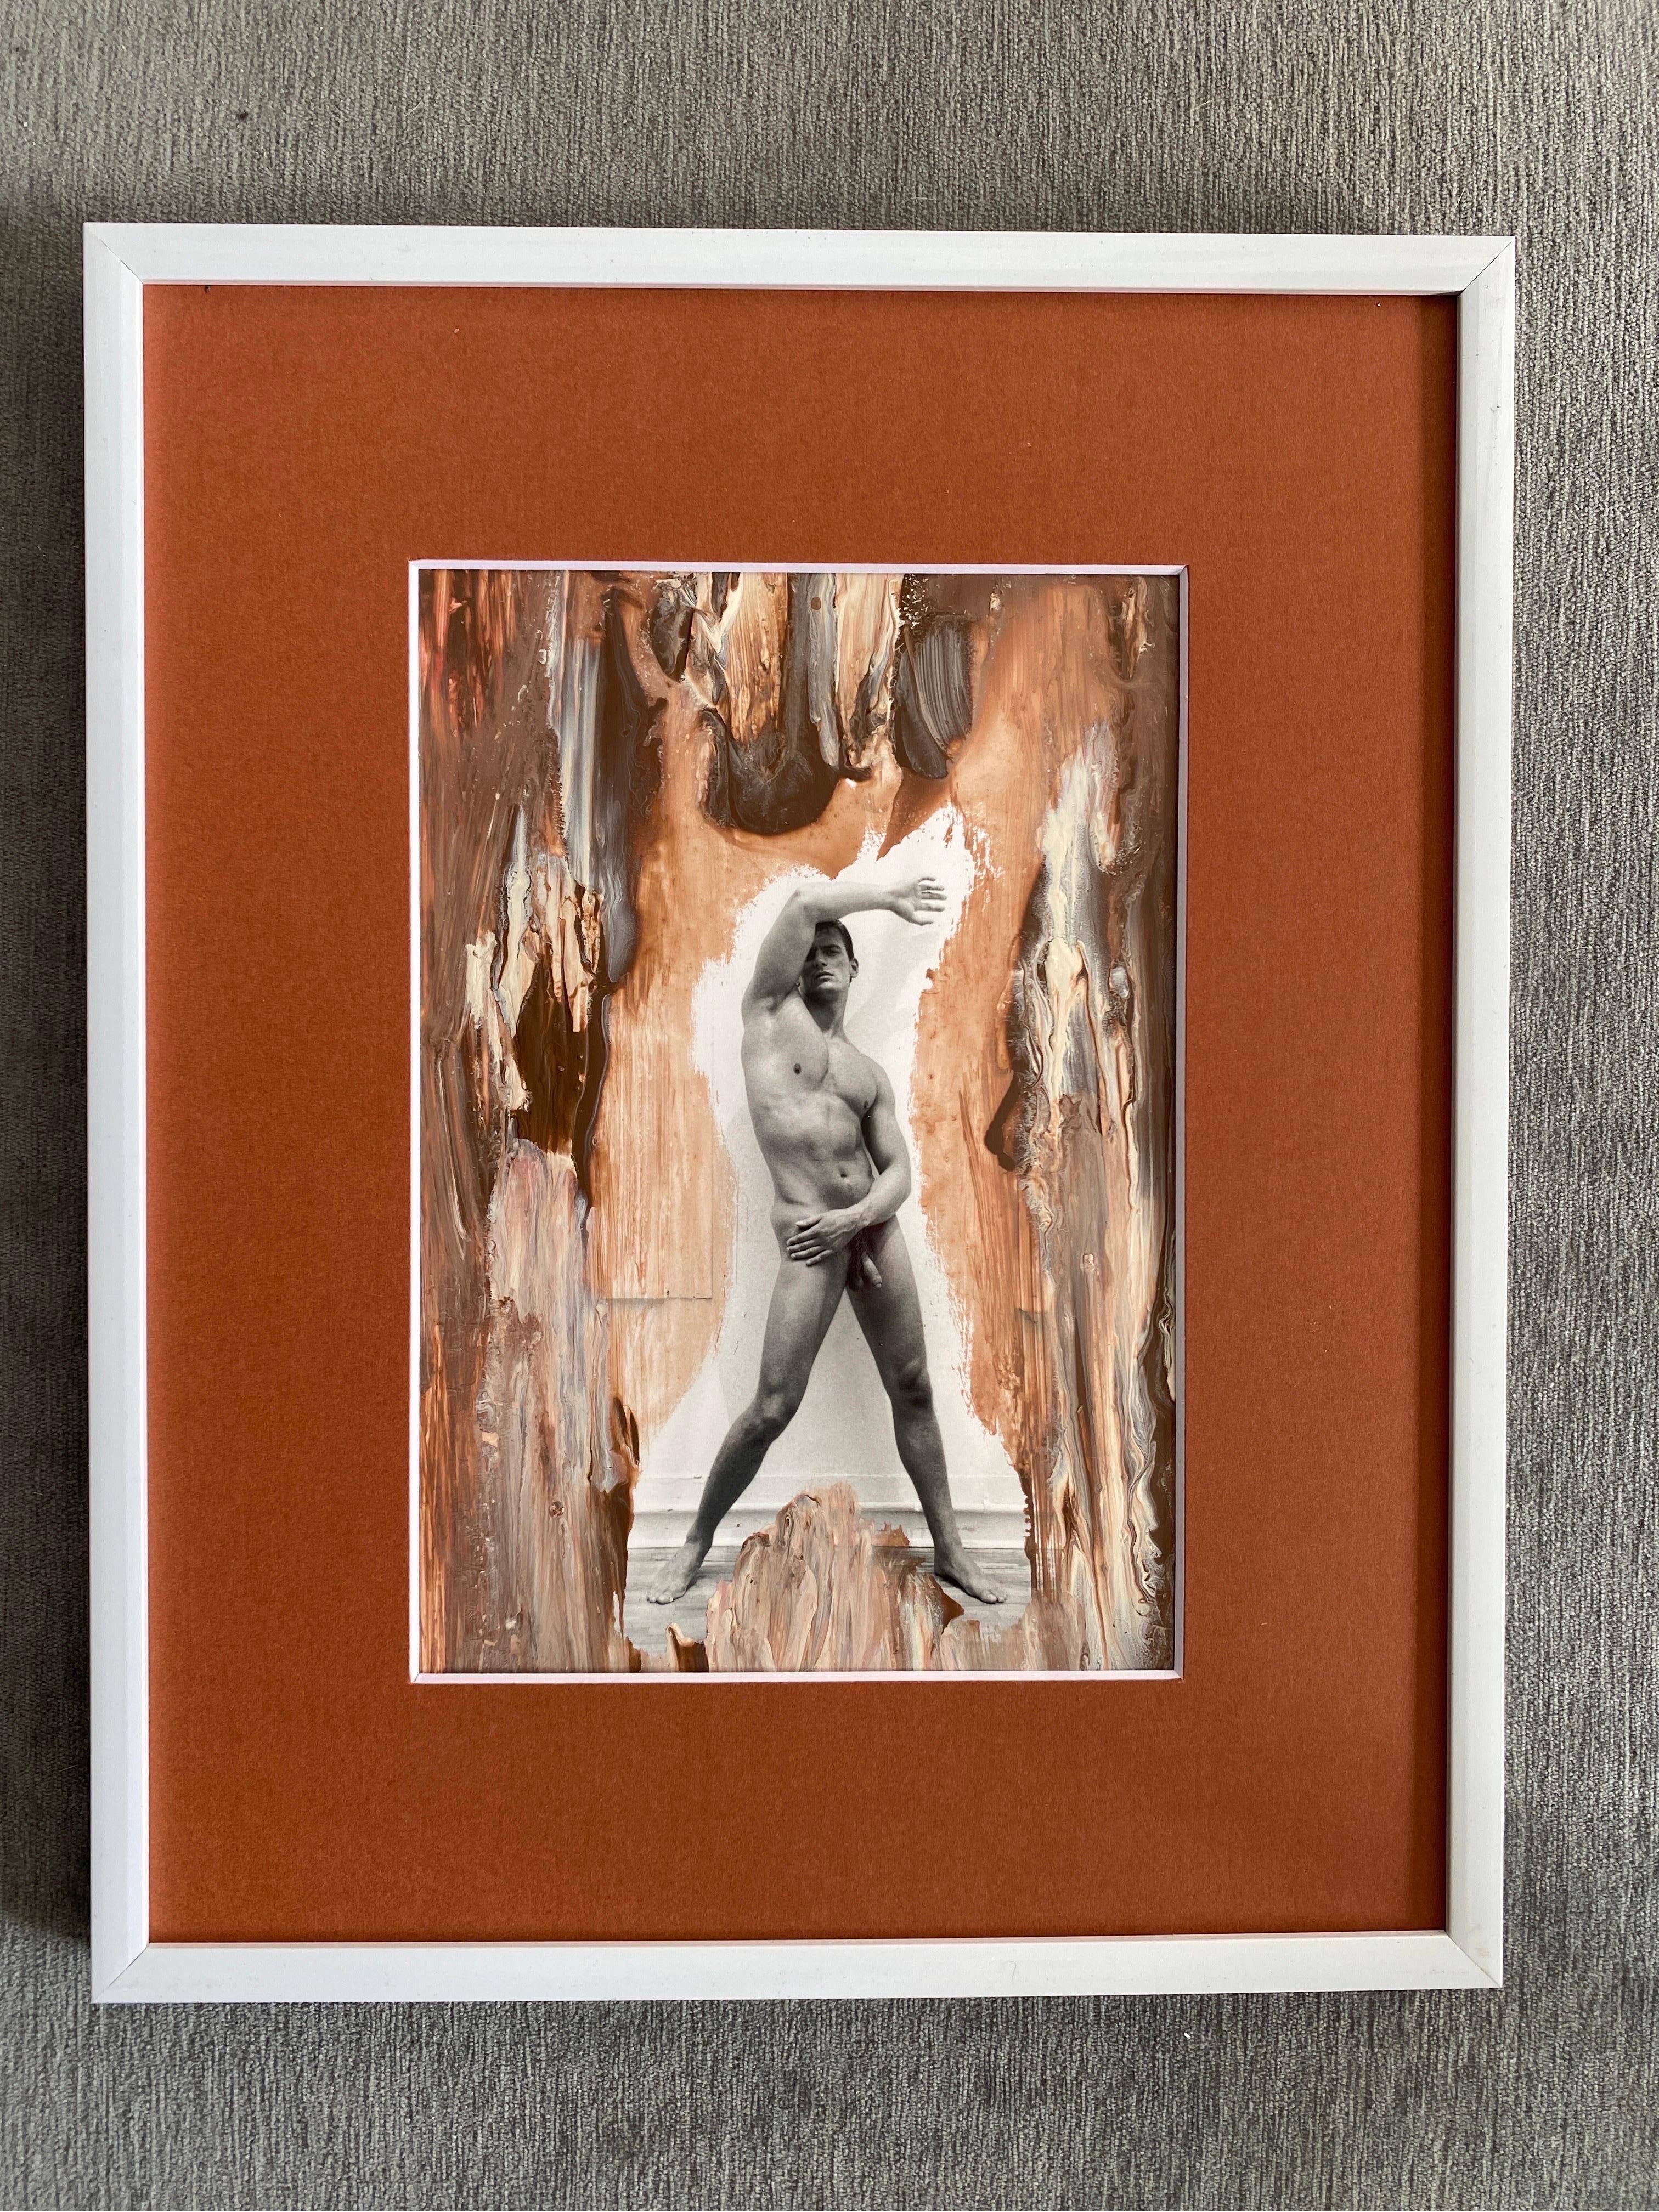 American Original B&W Male Nude Fine Art Photograph by George Machado, NYC 1997 